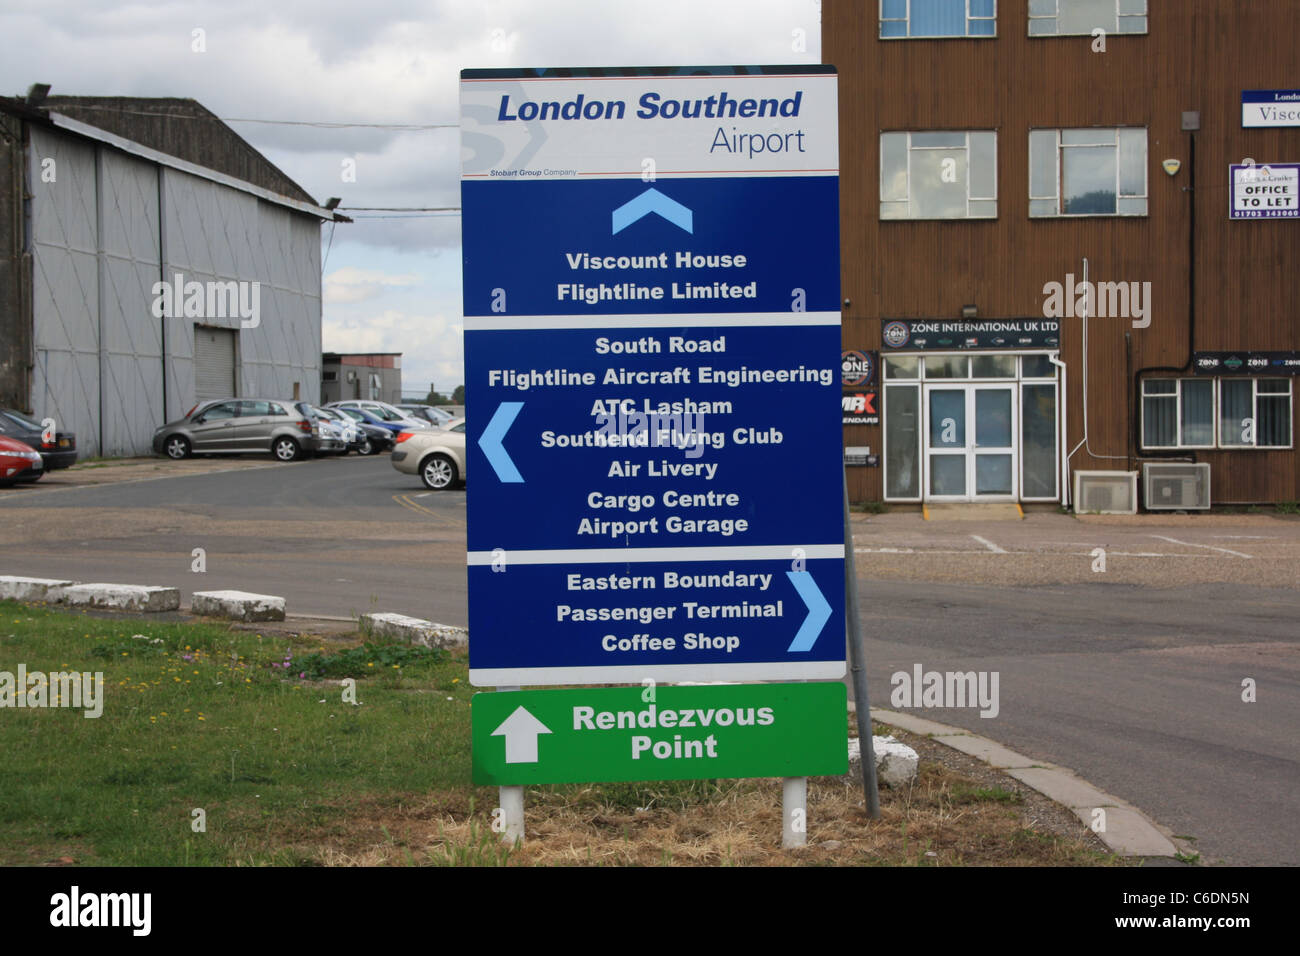 London Southend Airport bill board Stock Photo